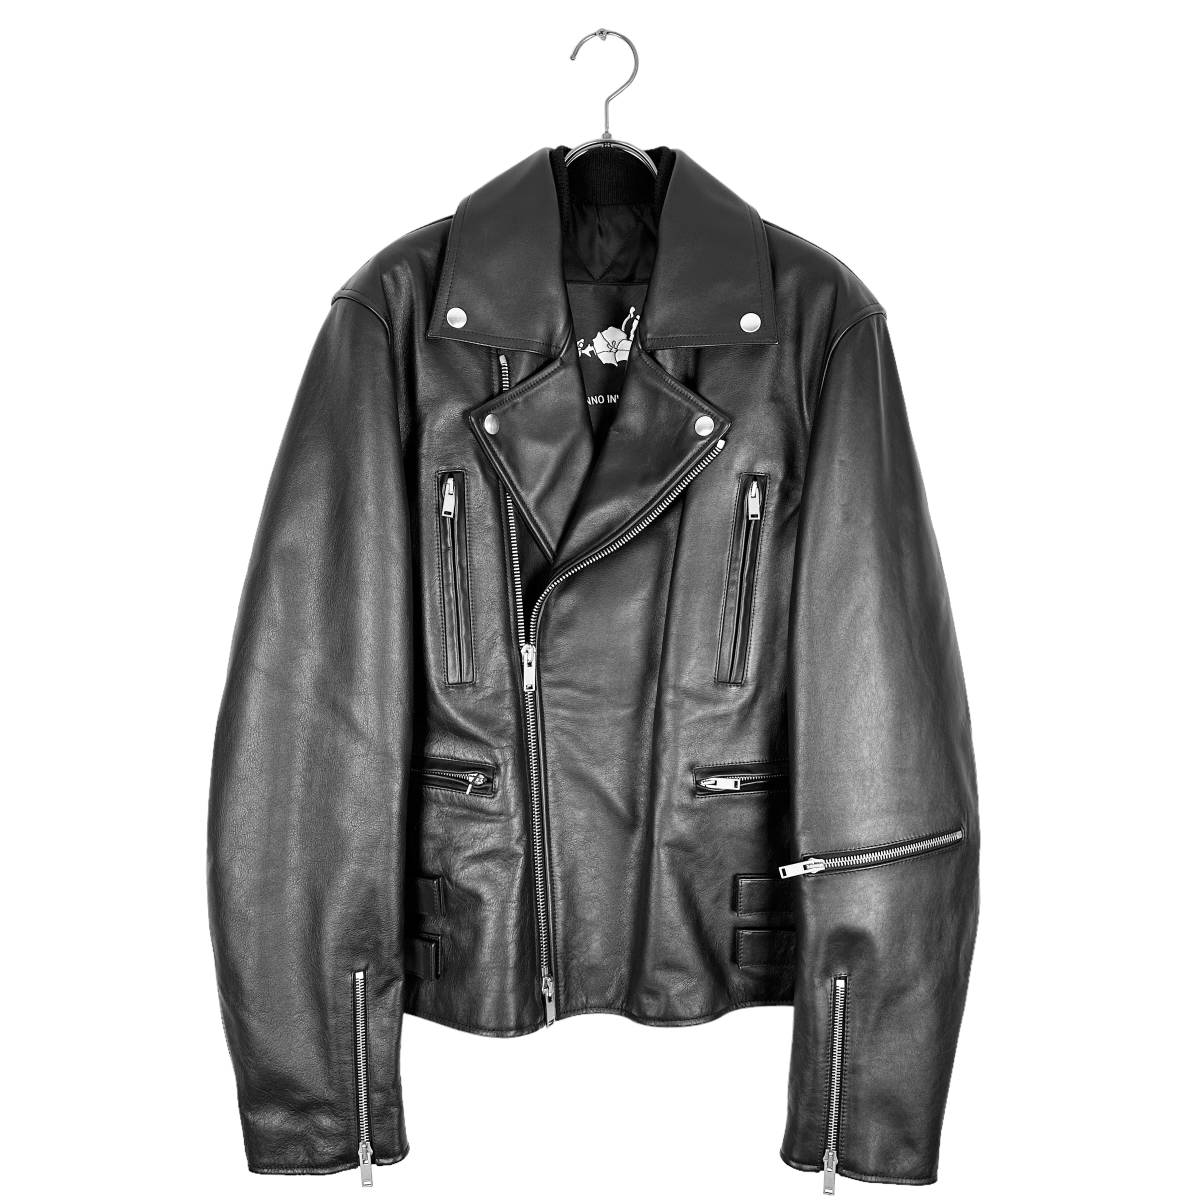 【20%OFF】JIL SANDER(ジルサンダー) Santa Maria Novella leather JKT (black)